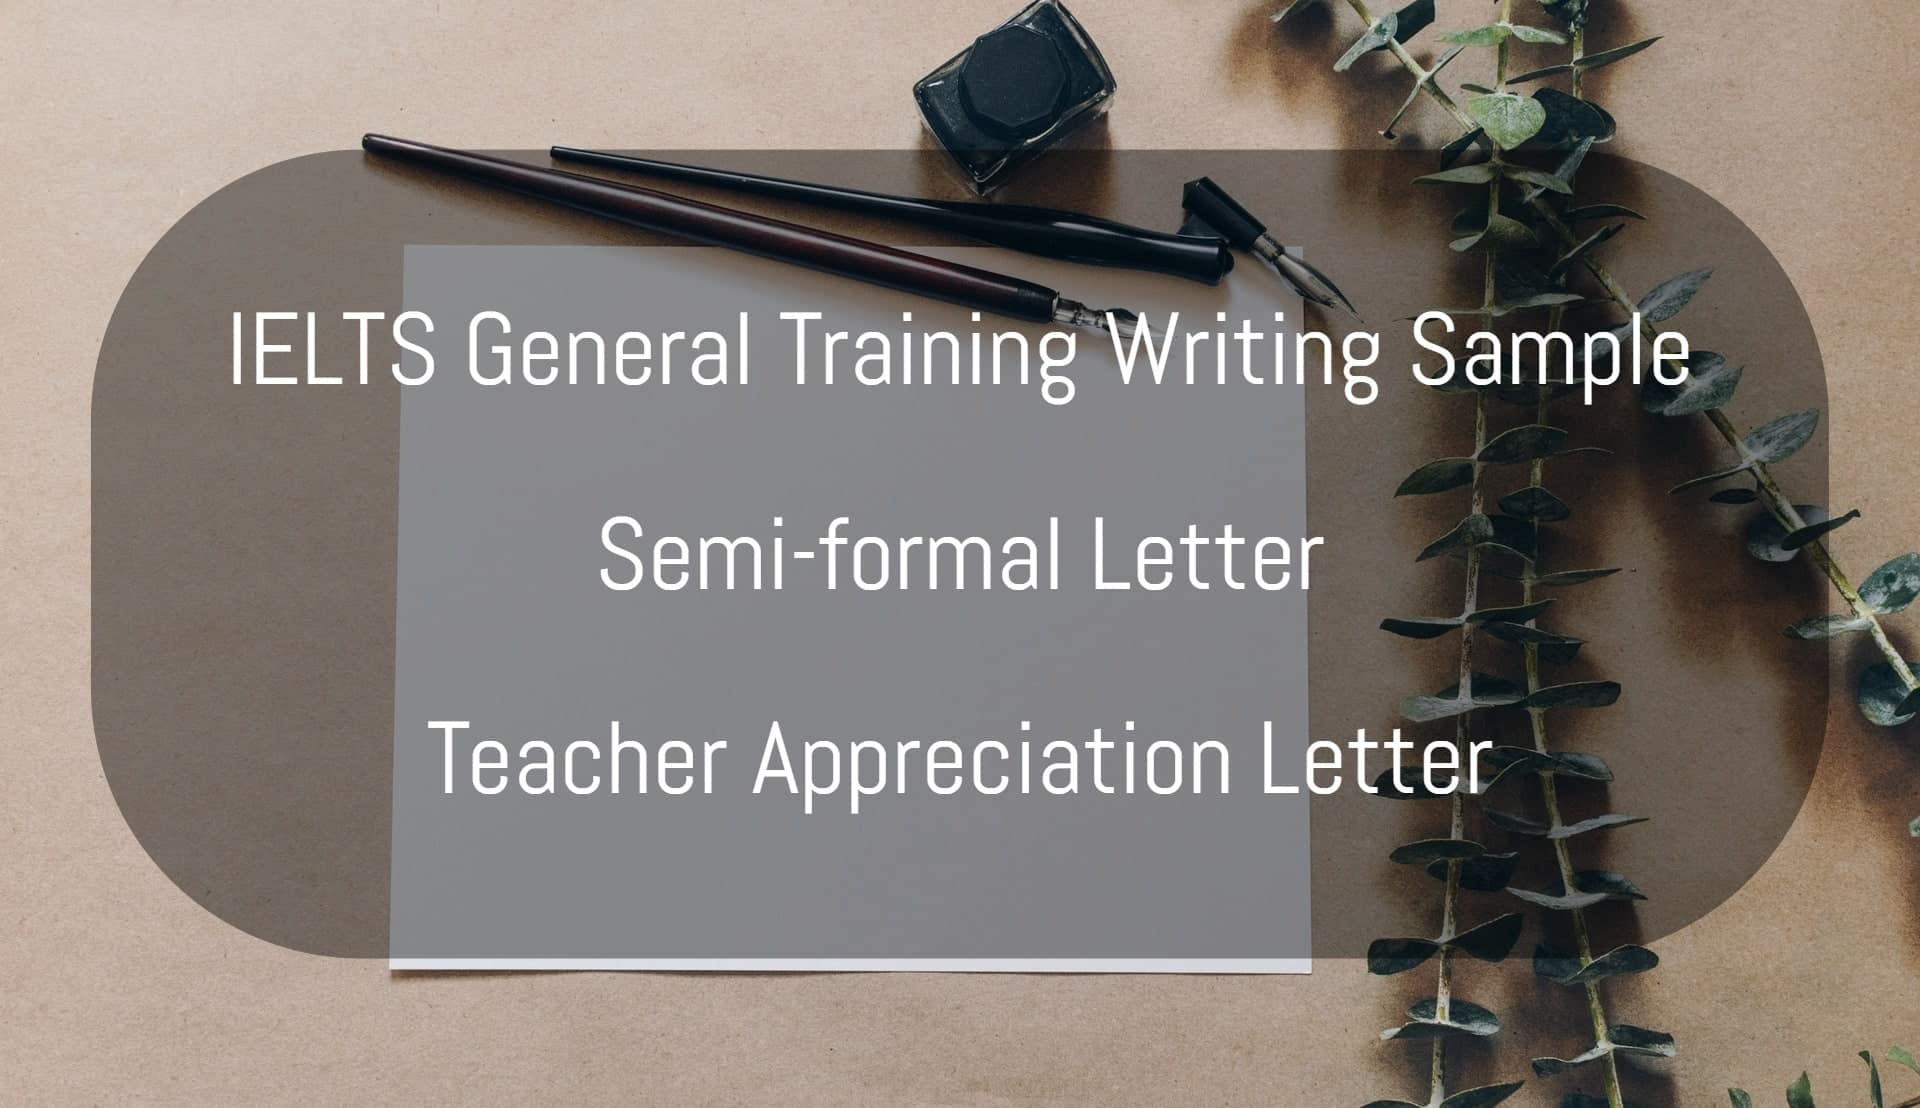 ielts general training semiformal letter teacher appreciation letter (2)